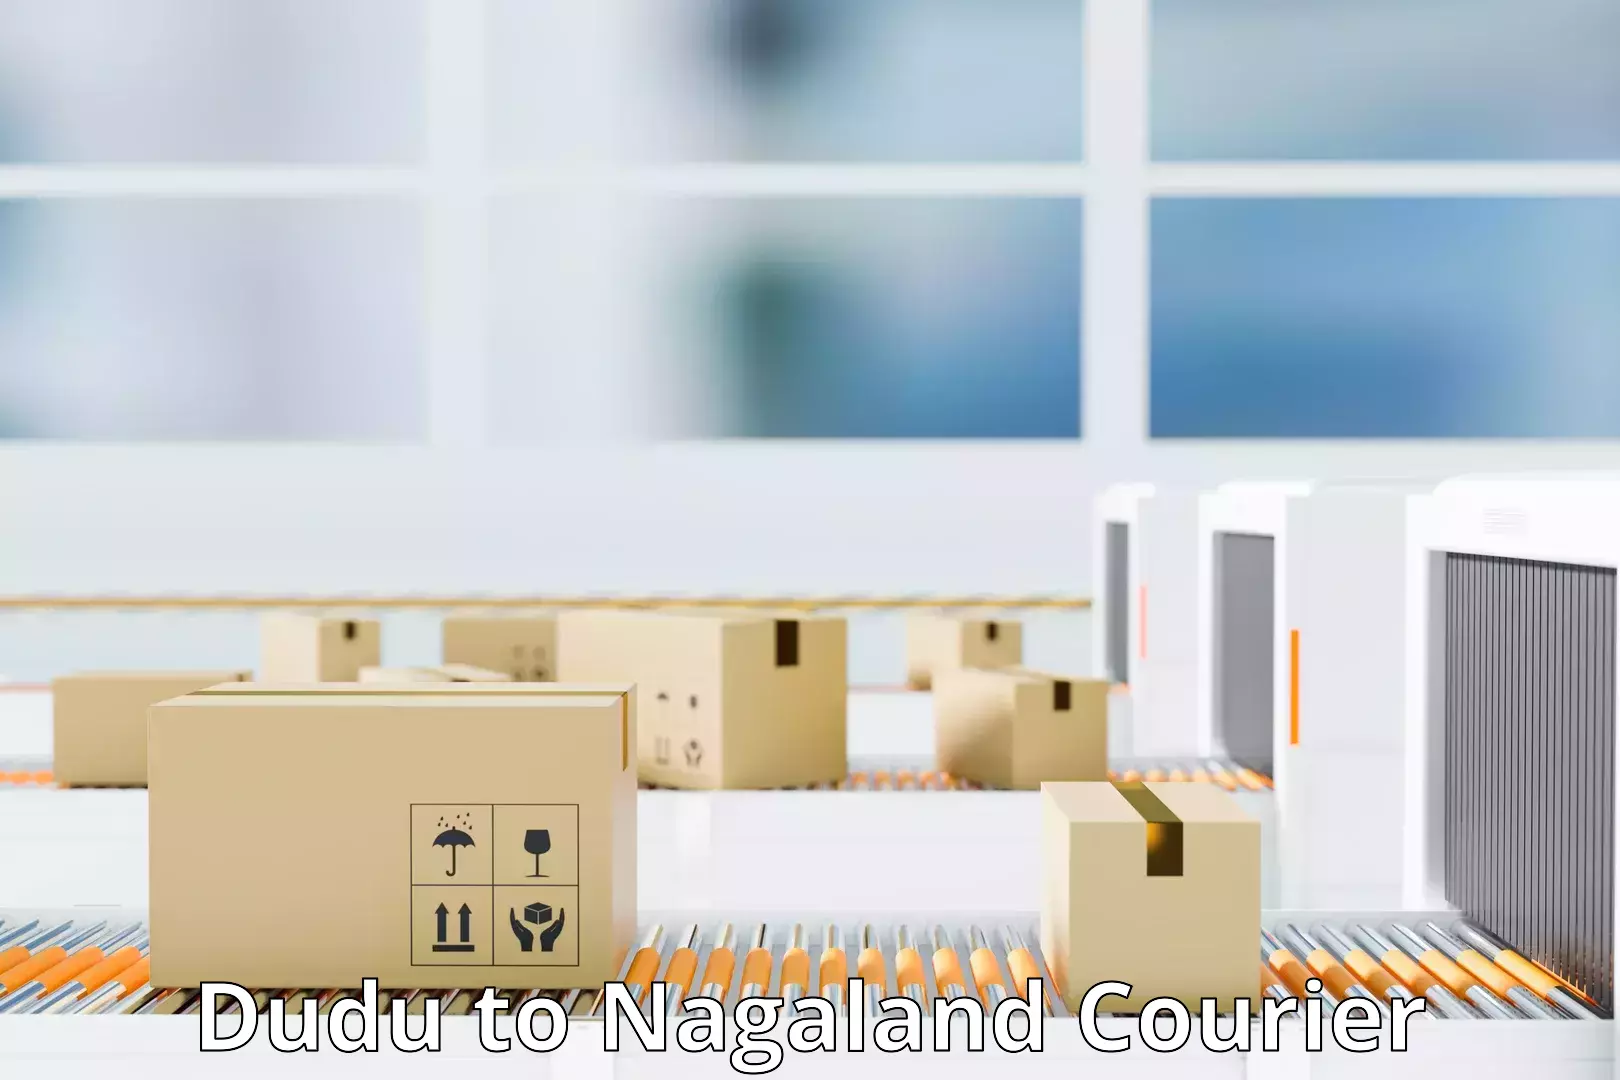 Courier service innovation Dudu to NIT Nagaland